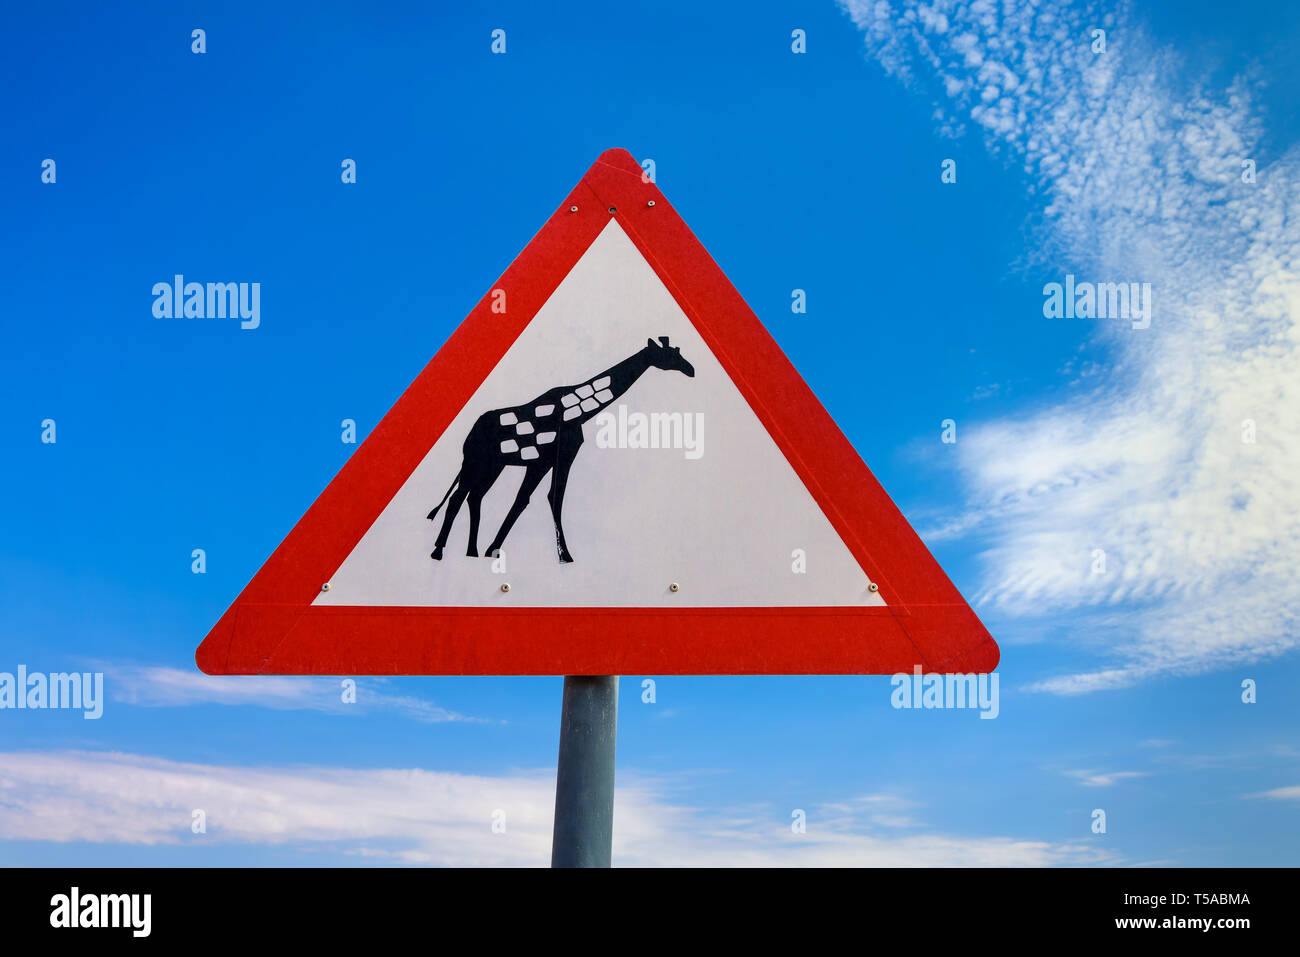 Giraffen Kreuzung Warnung Schild Stockfoto